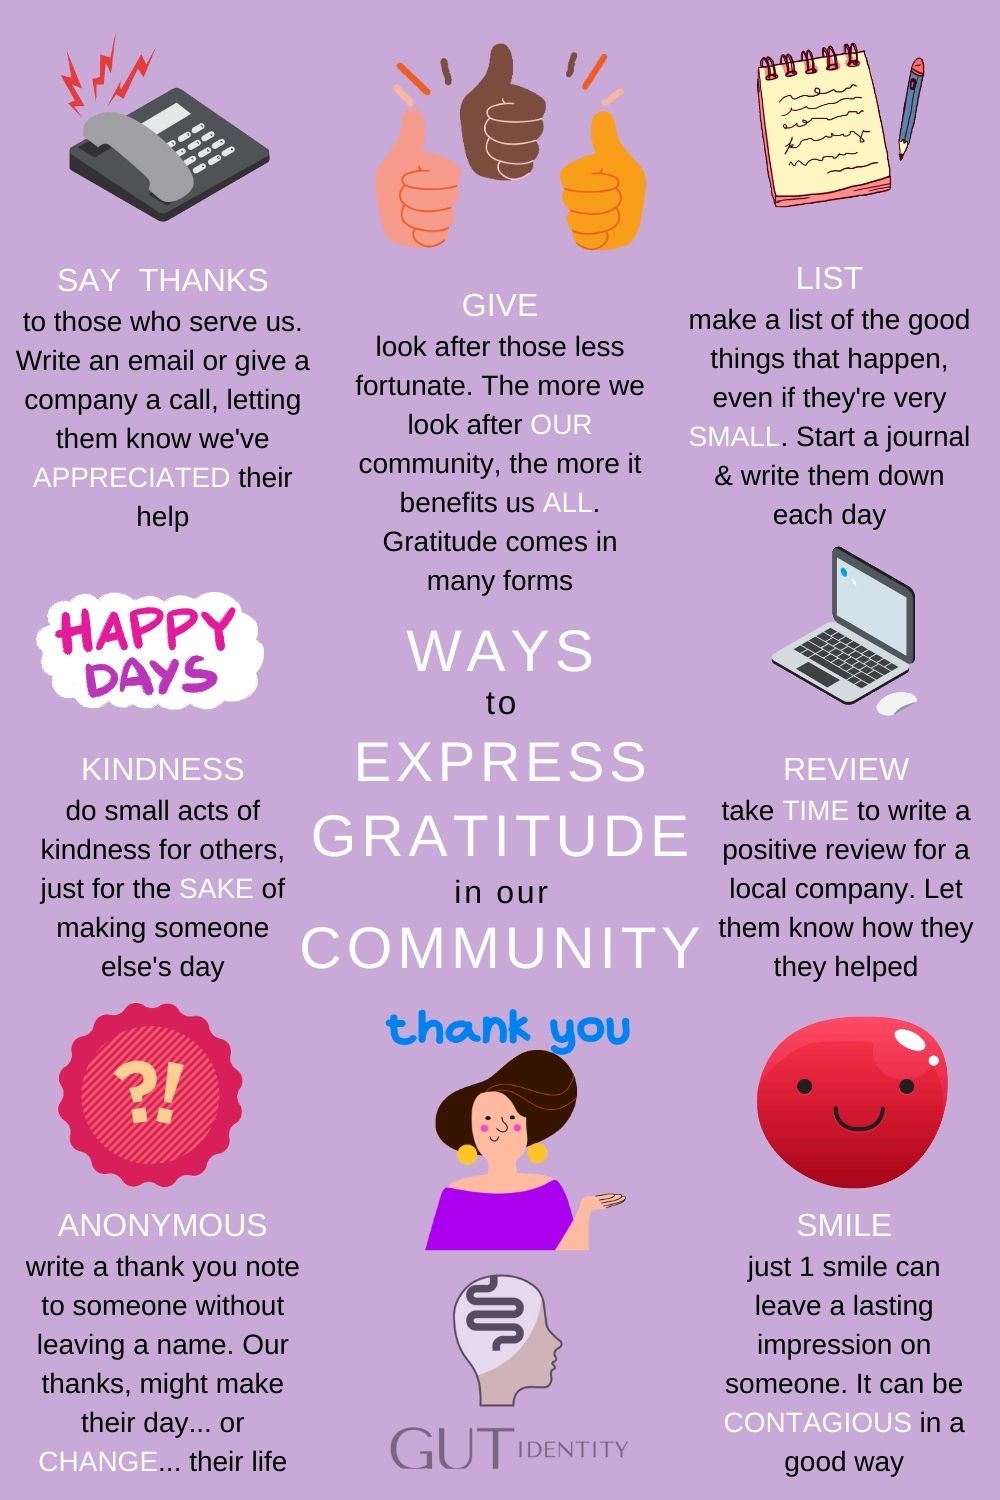 Ways to Express Gratitude by Gutidentity